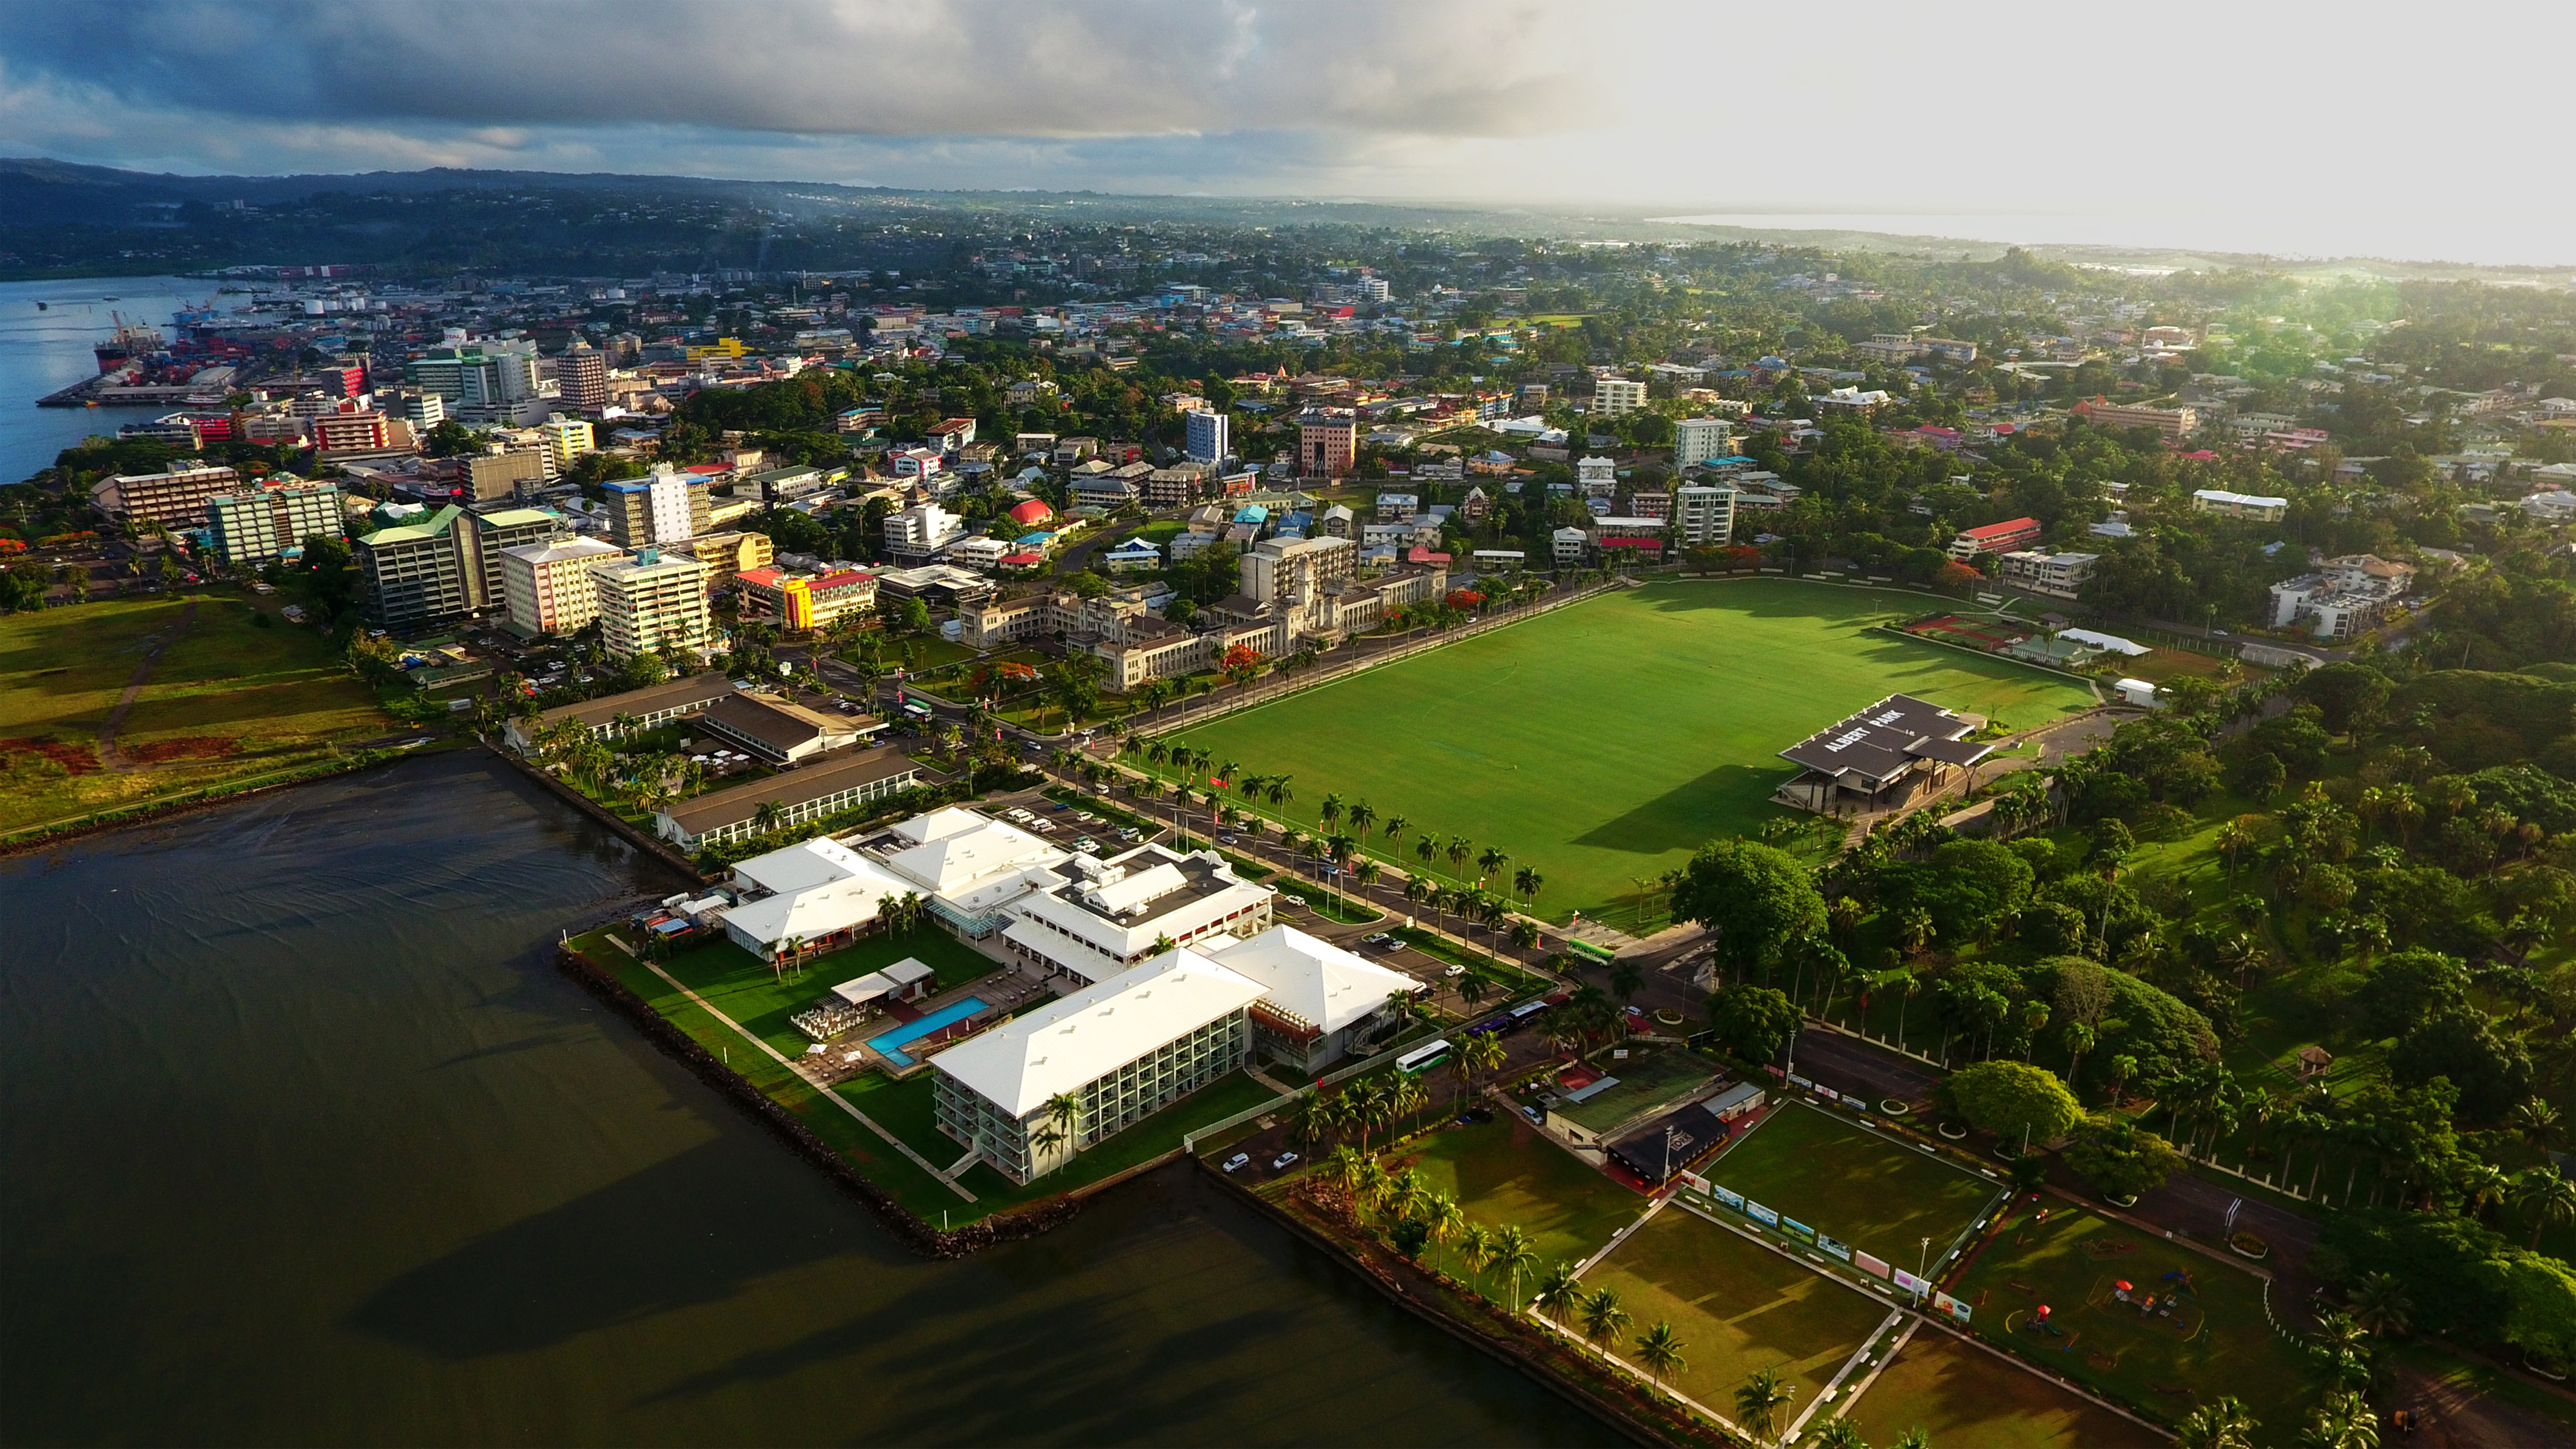 Suva City